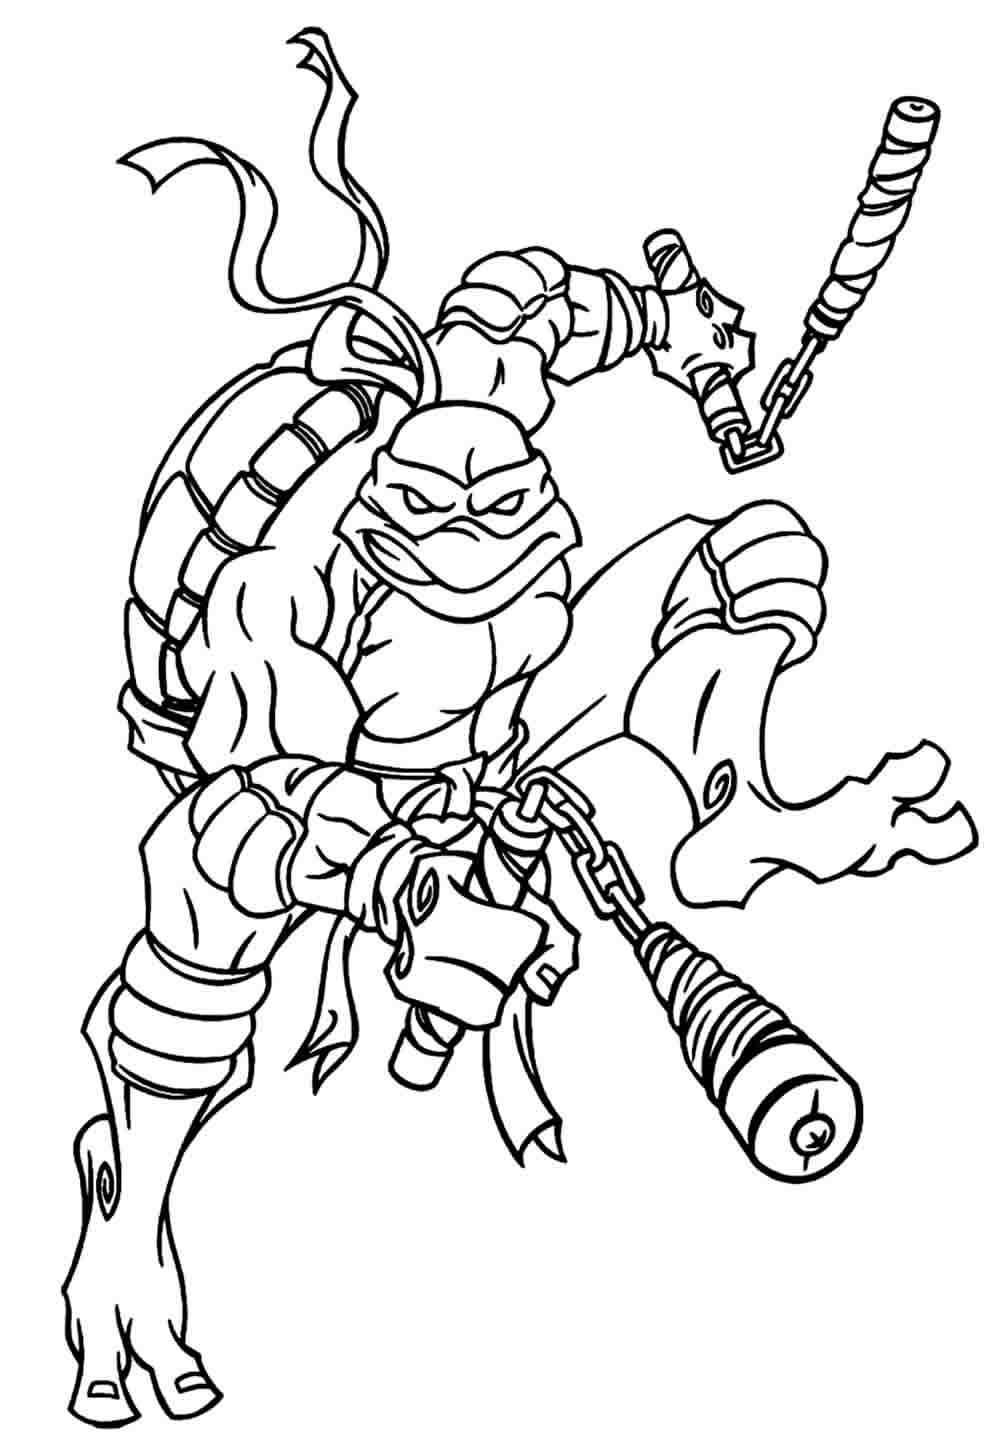 Desenho de Michelangelo - Tartarugas Ninja - Colorir